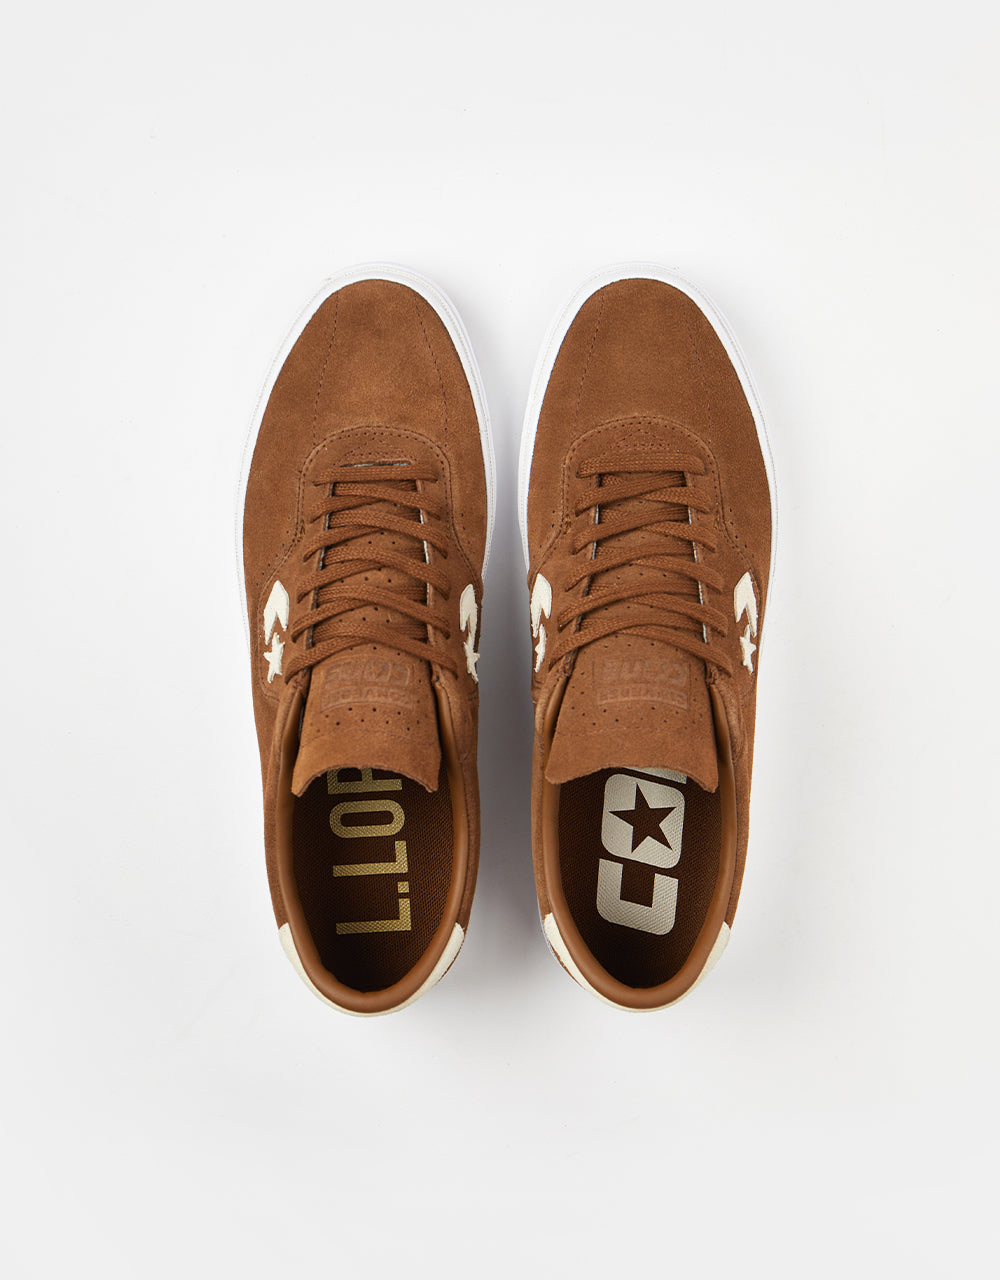 Converse Louie Lopez Pro Skate Shoes - Chestnut Brown/Natural Ivory